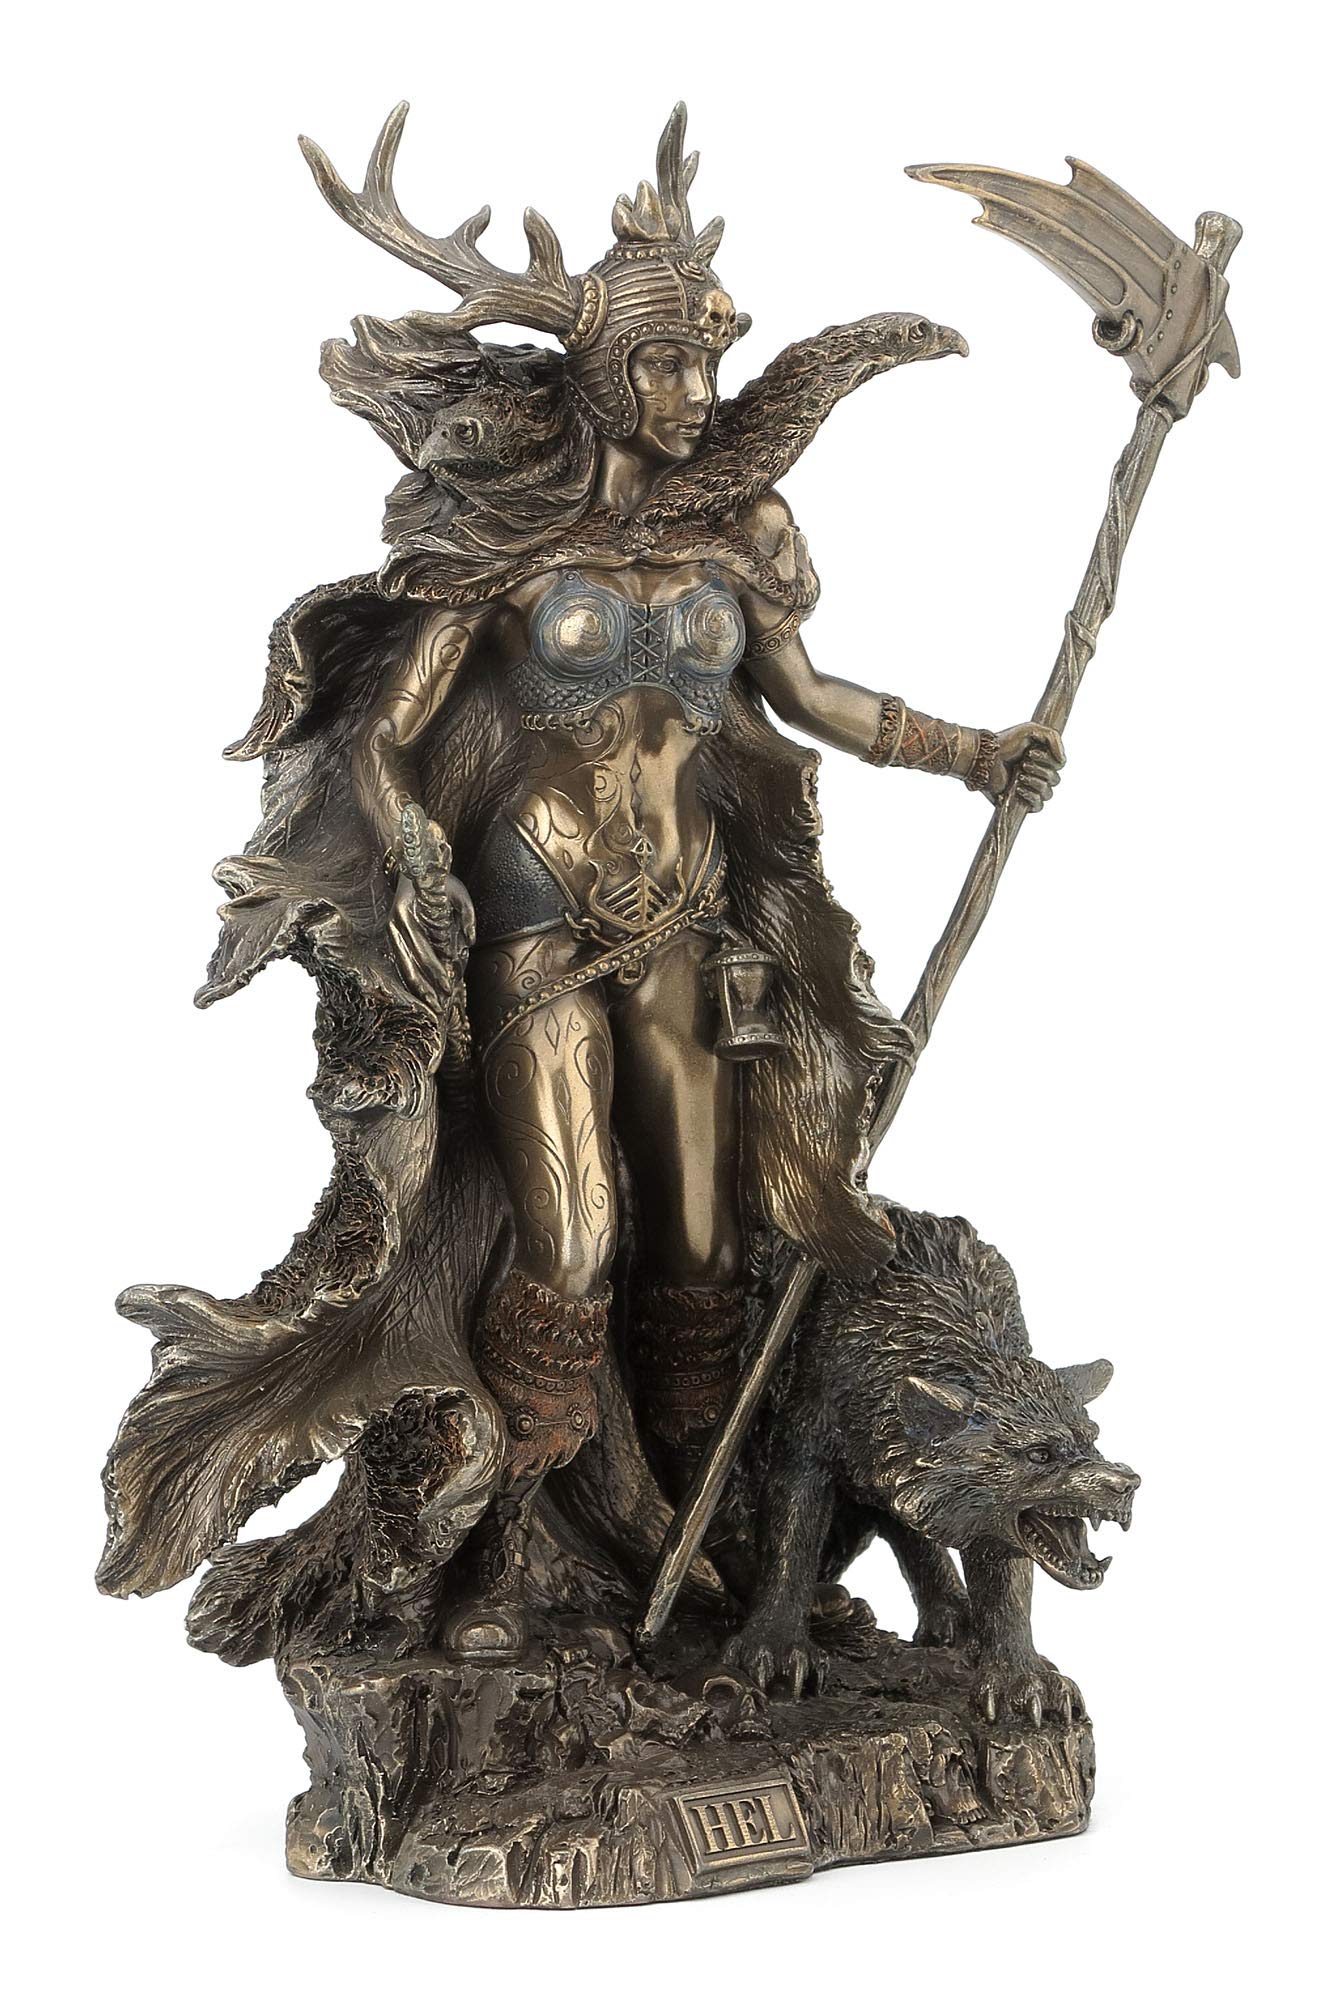 Hel Norse Goddess of the Underworld